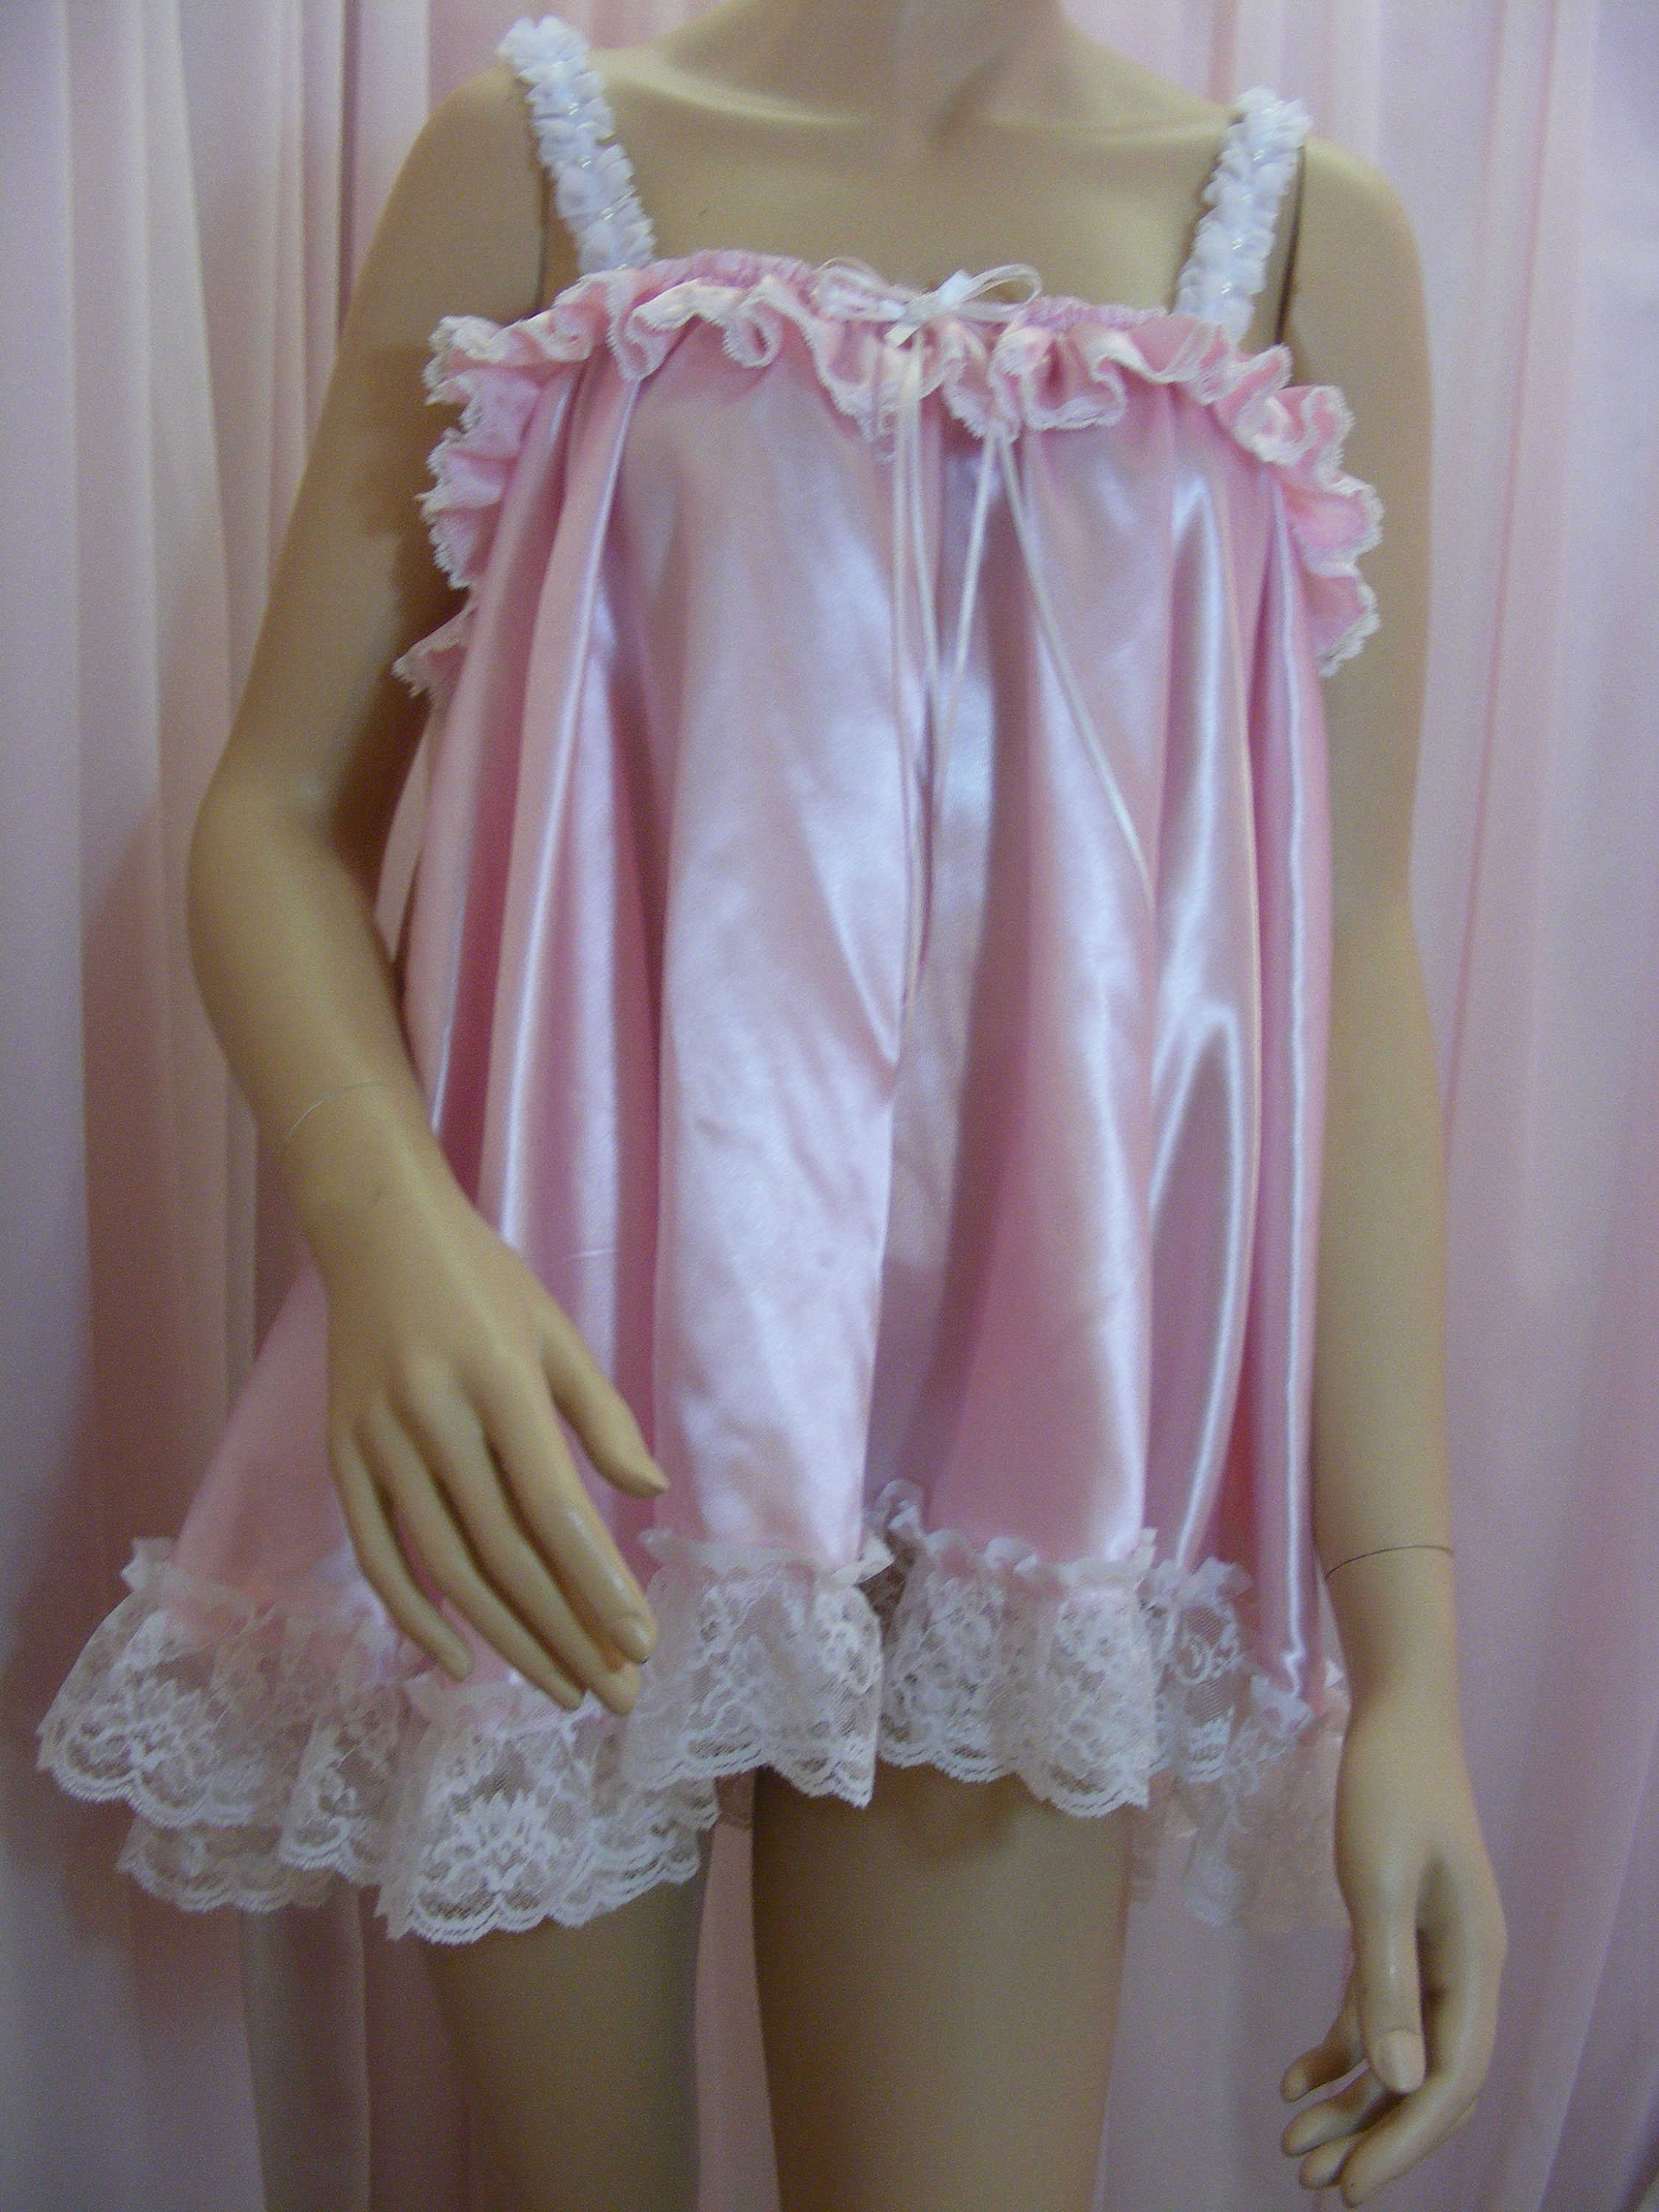 Sissy lolita pink satin baby doll nightie negligee dress top | Etsy